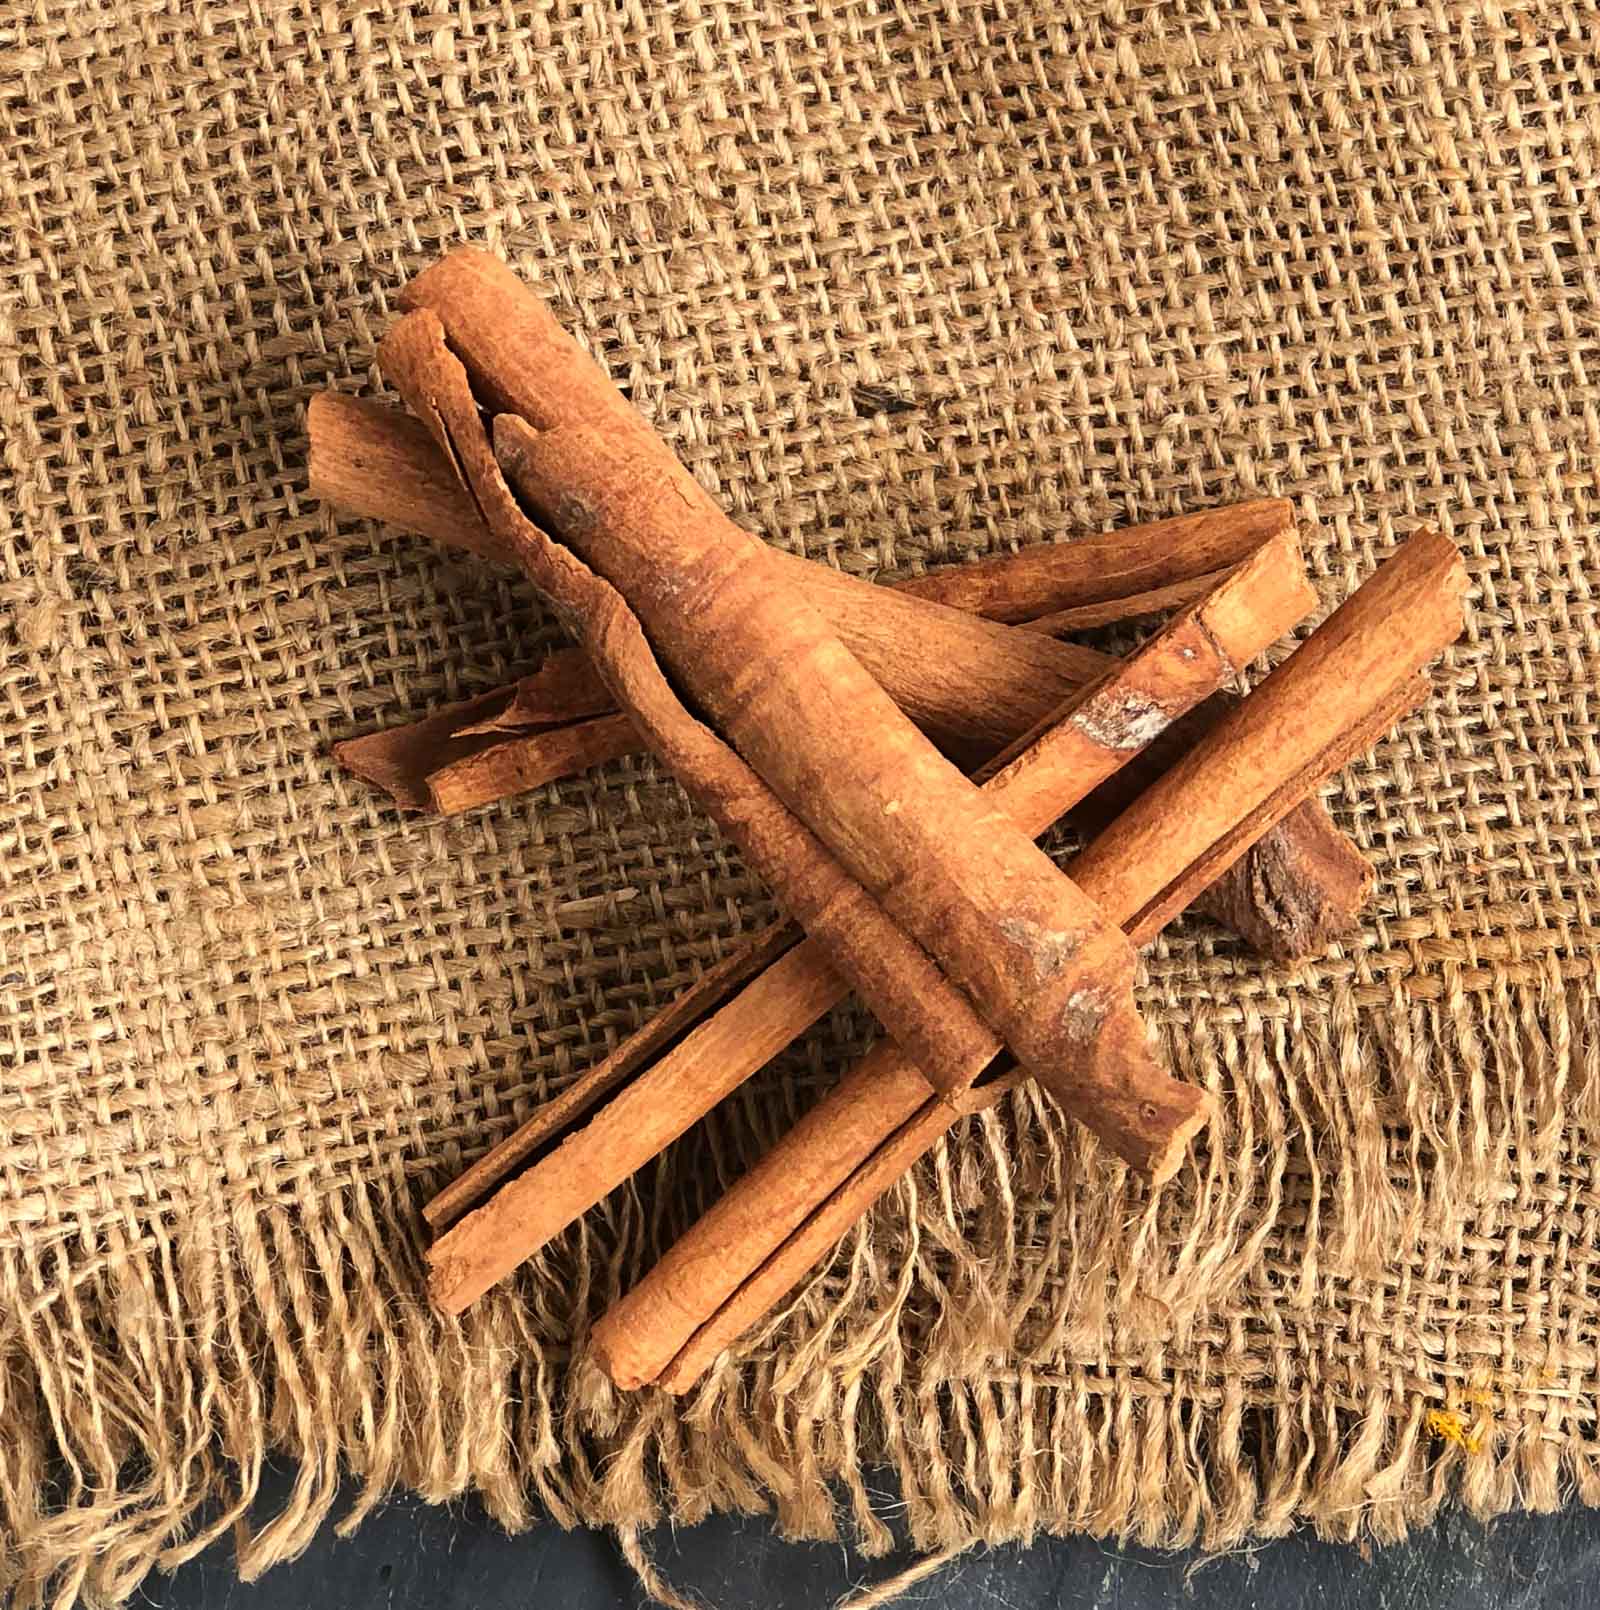 Cinnamon Stick